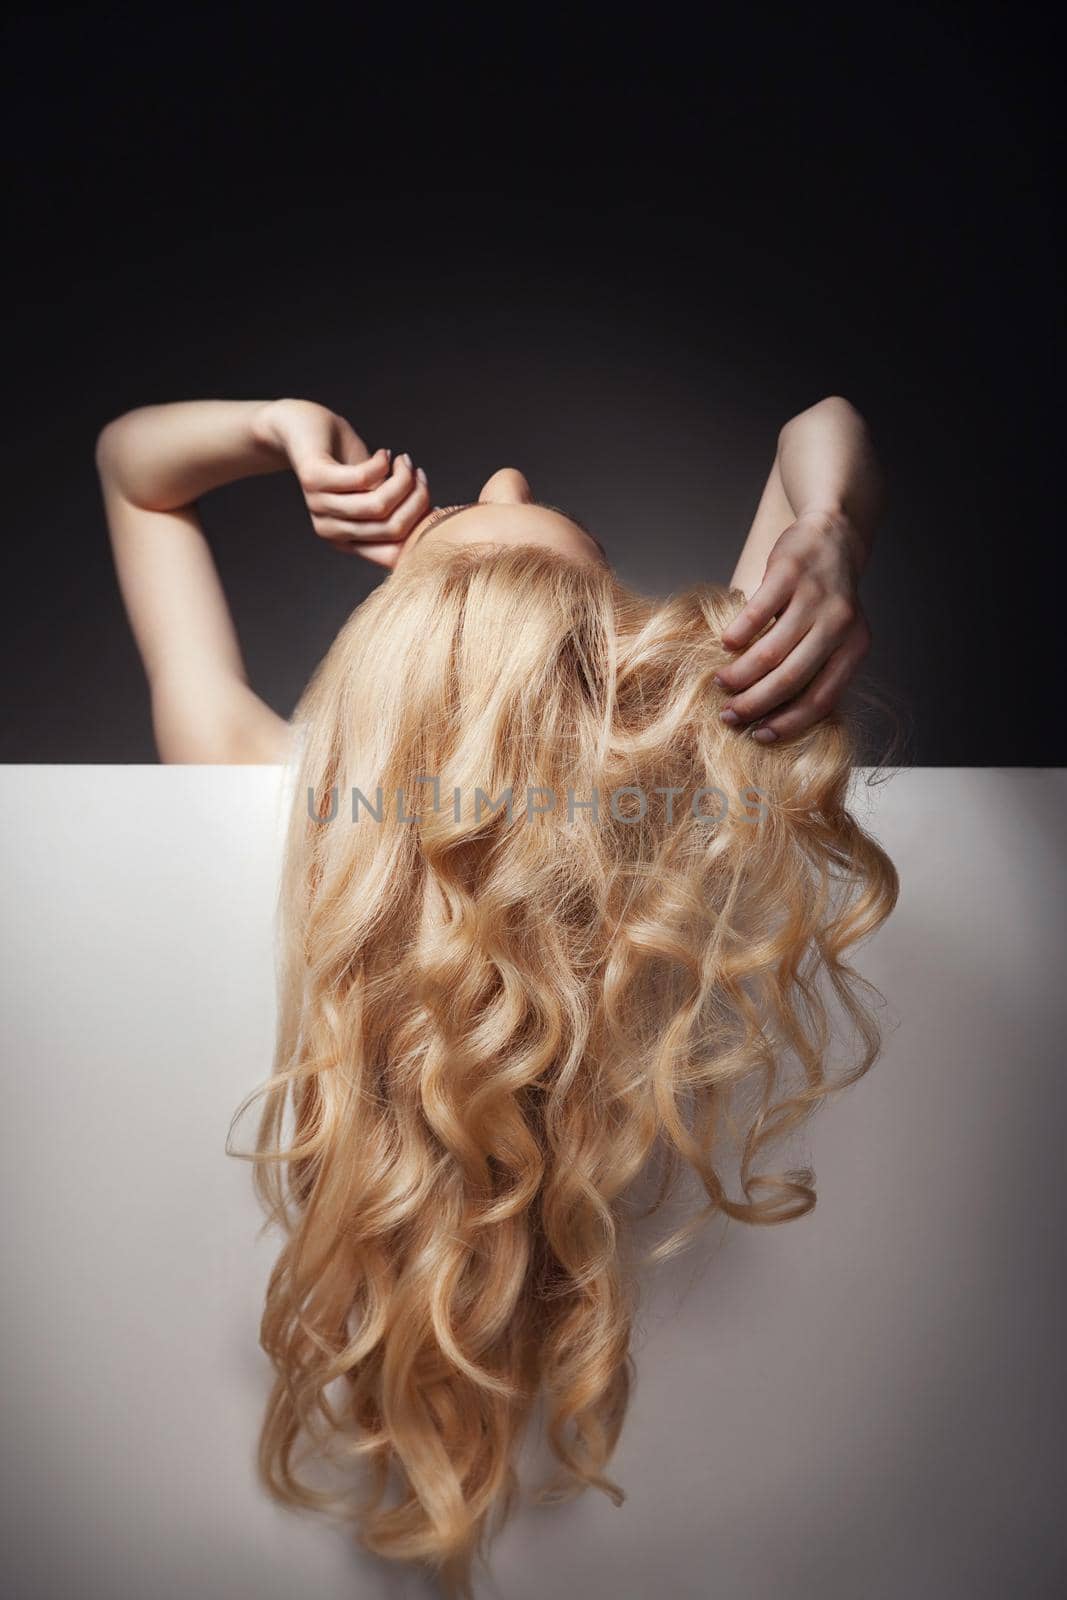 Beautiful Long Hair on an Attractive Woman by Julenochek